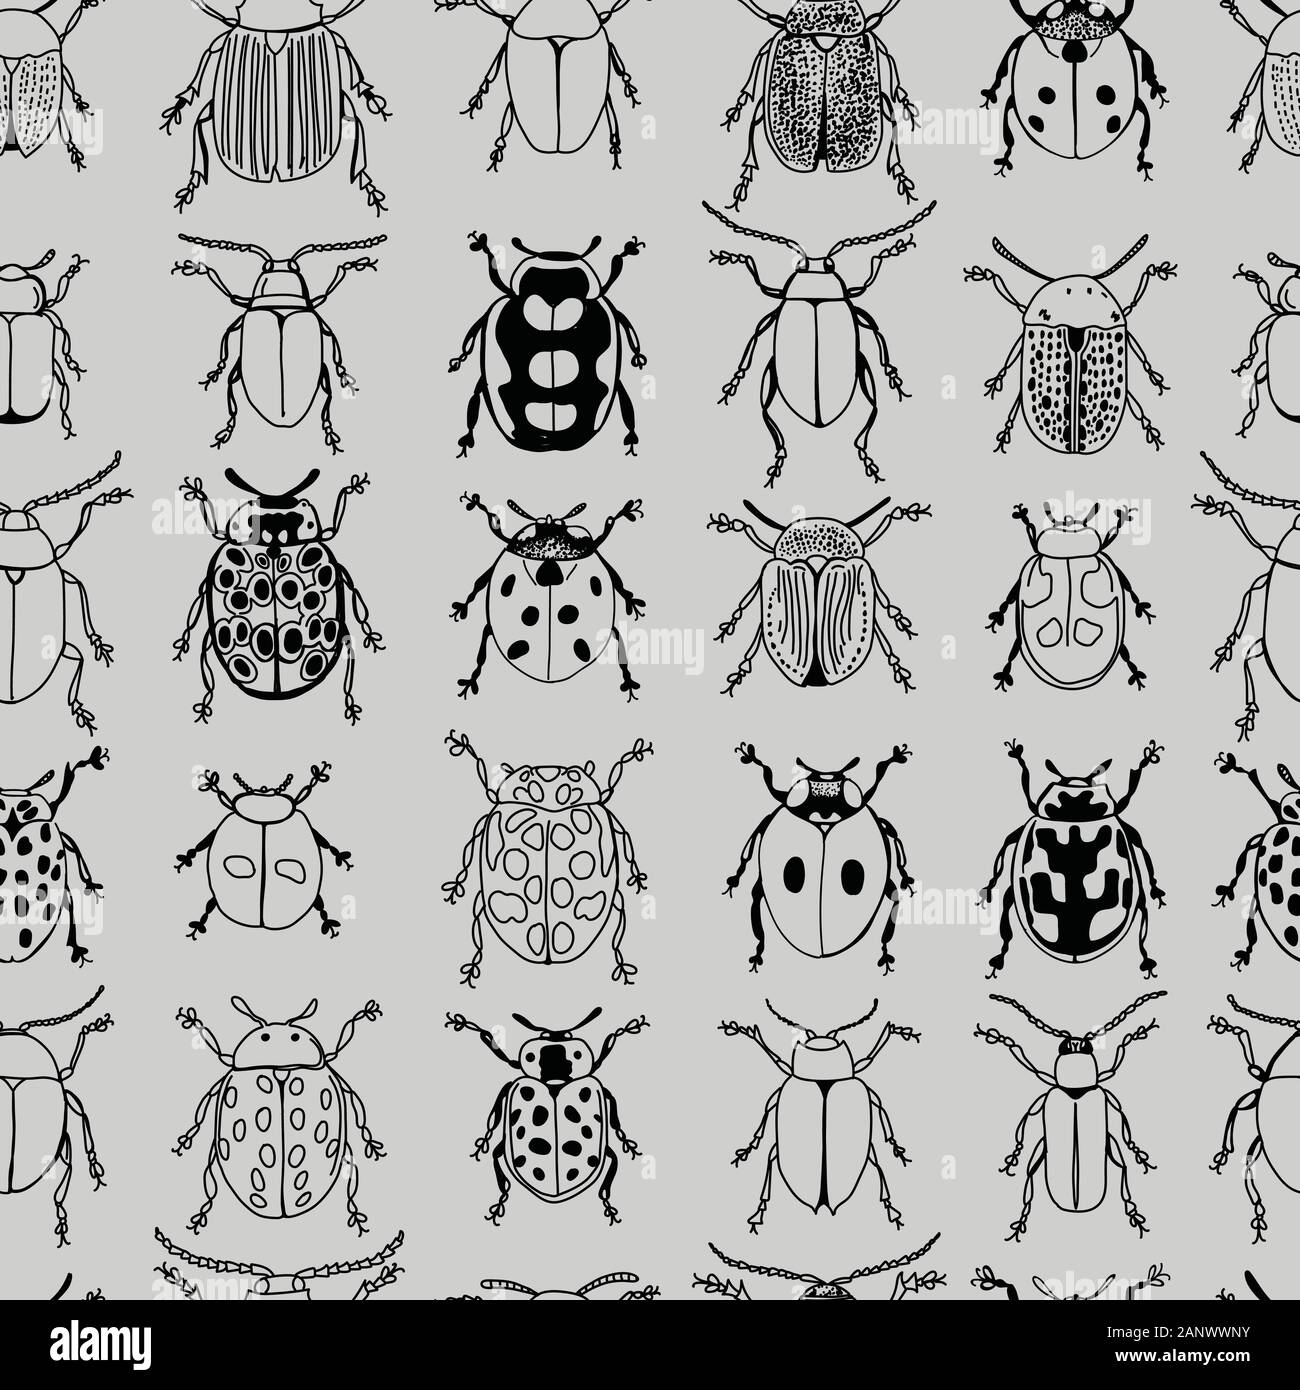 Monotone Beetles Black Linework Doodle Design Seamless Pattern on Grey Background Stock Vector